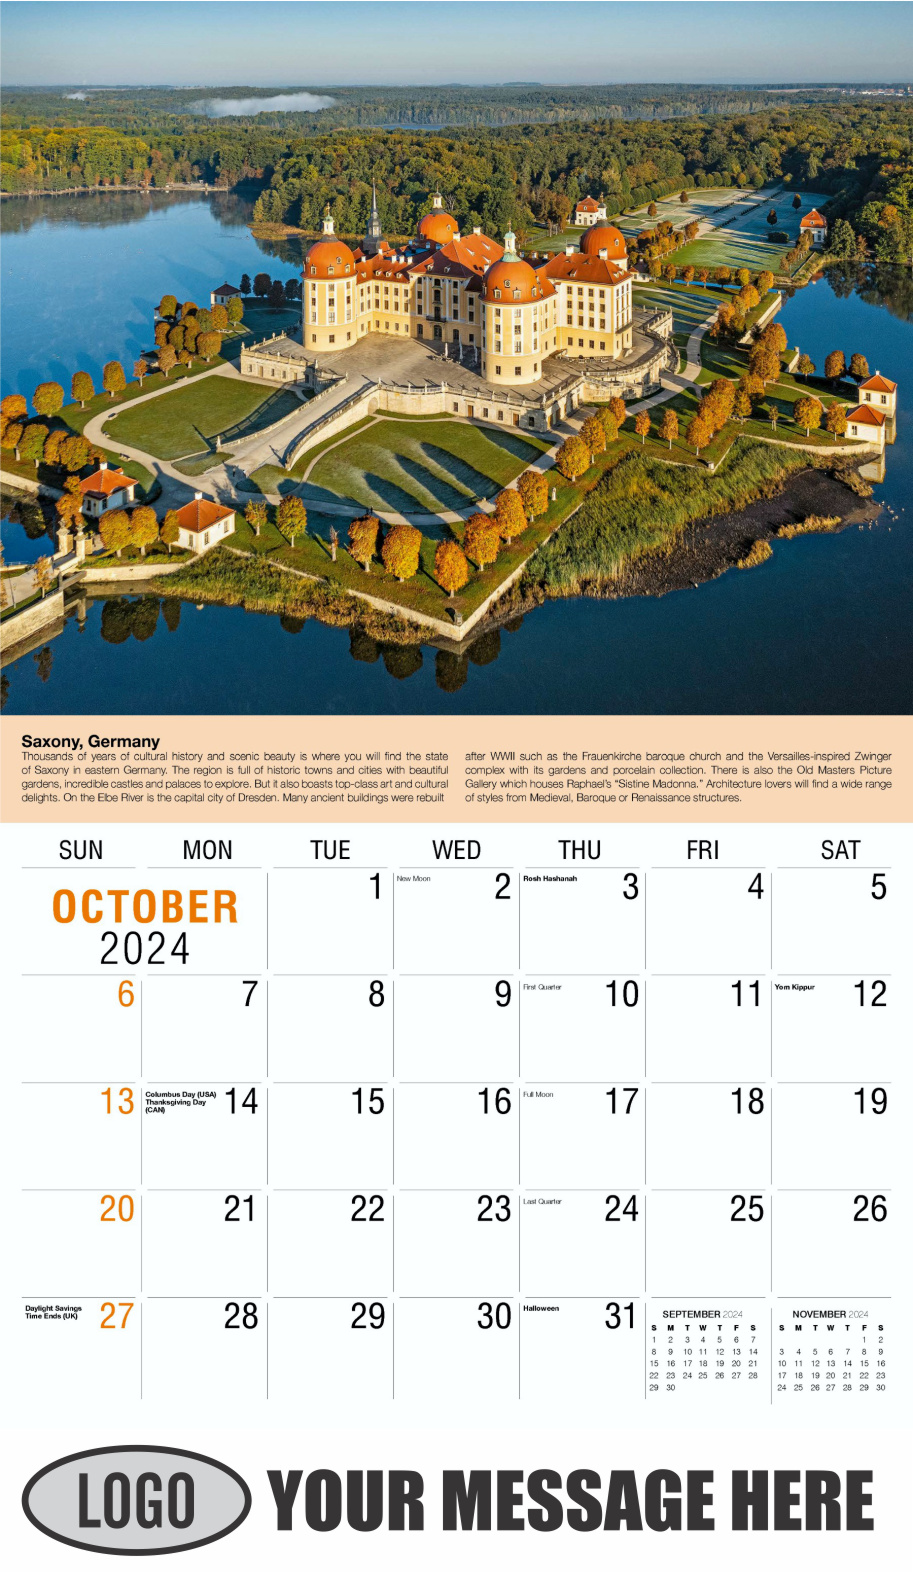 World Travel 2024 Business Advertising Wall Calendar - October